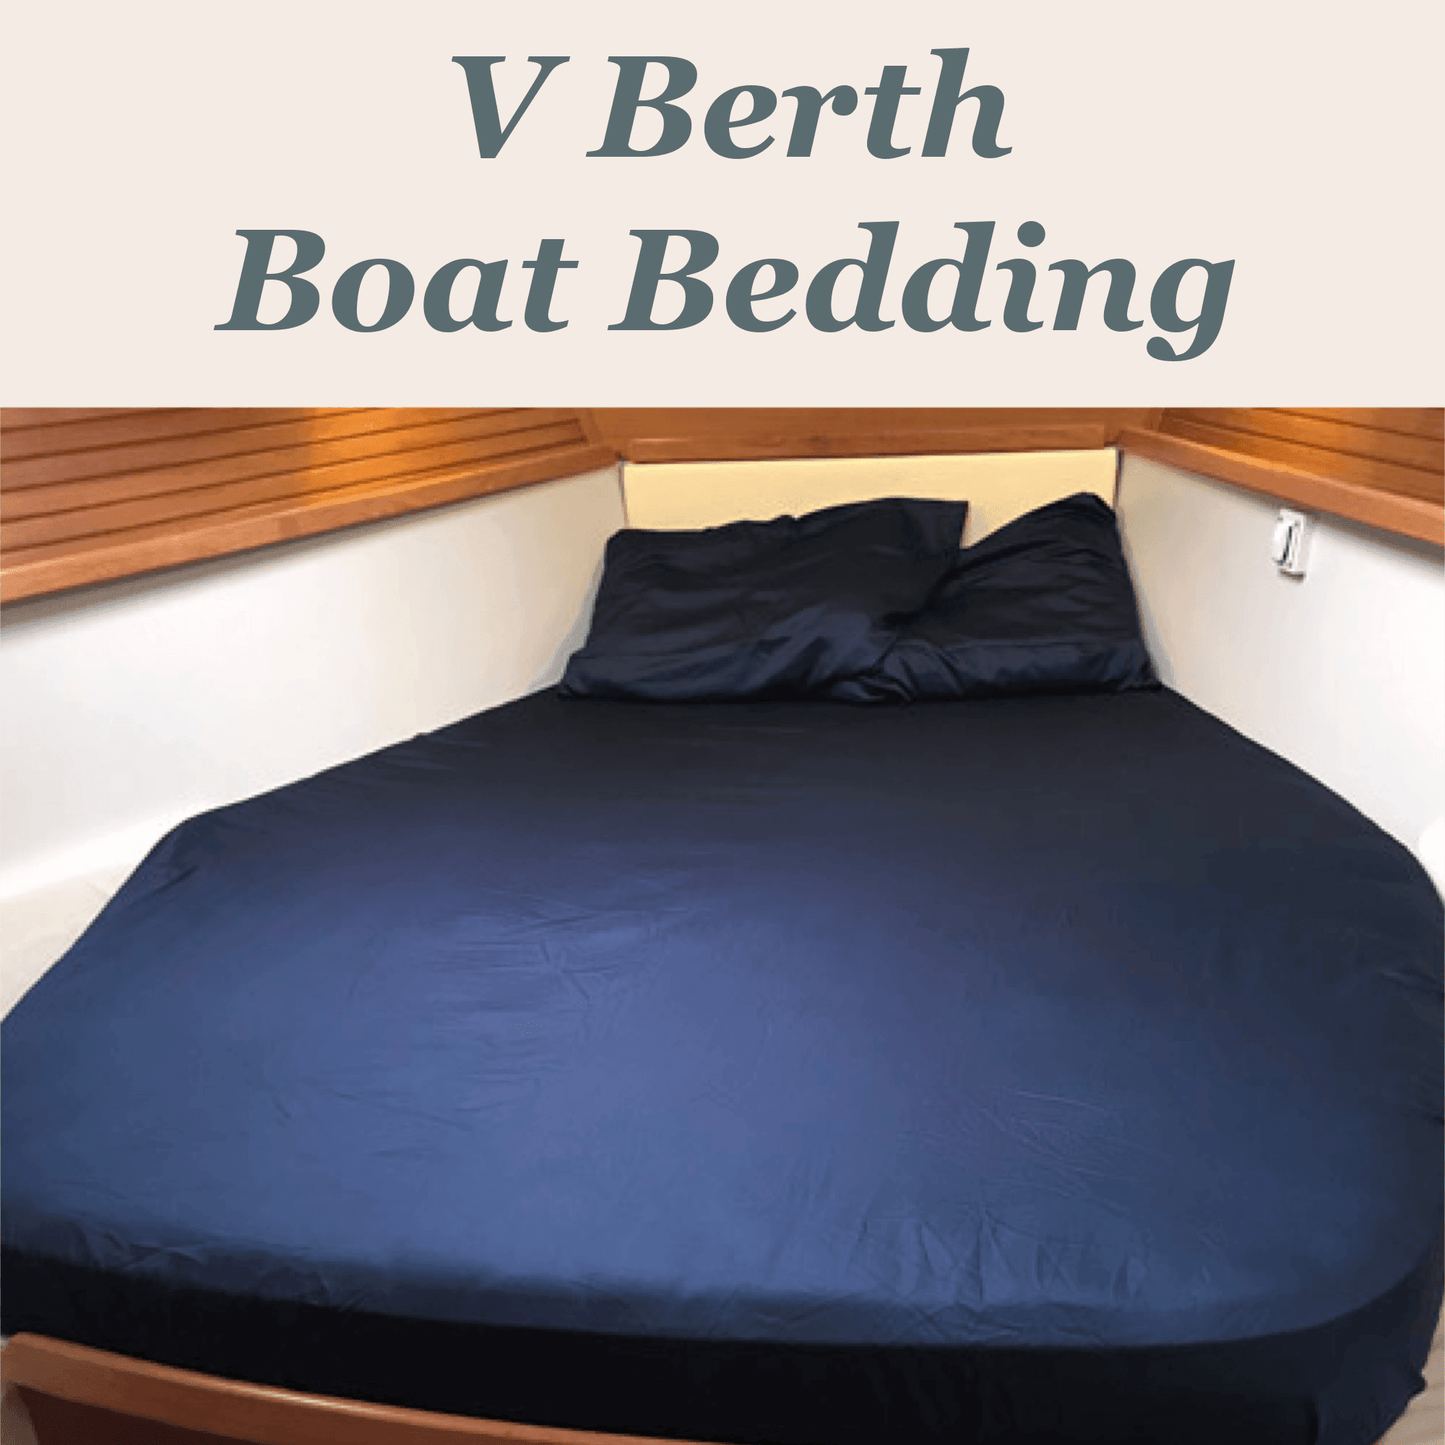 V Berth Boat Sheet Sets 4PC - 600TC 100% Cotton - Luxury Yacht Bedding - CinchFit USA Luxury Boat Bedding